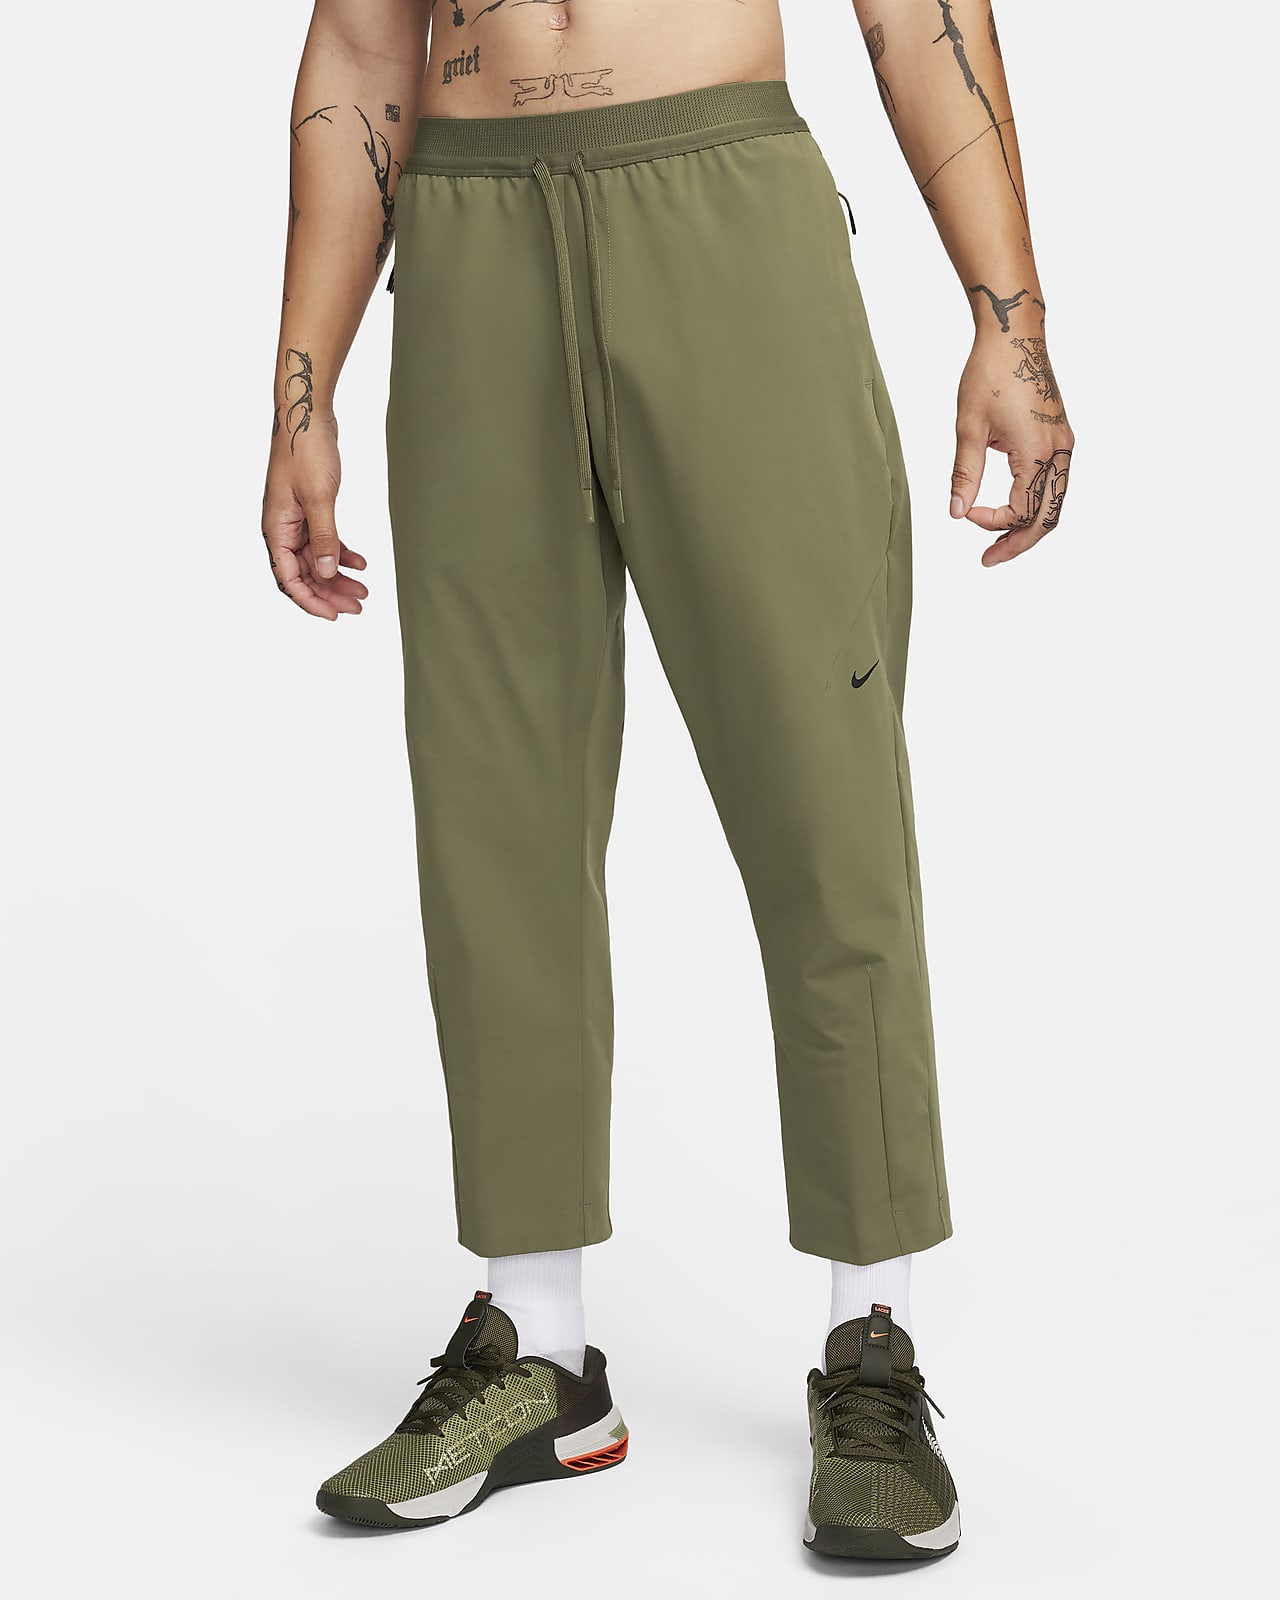 Nike A.P.S. Men's Dri-FIT Woven Versatile Pants.